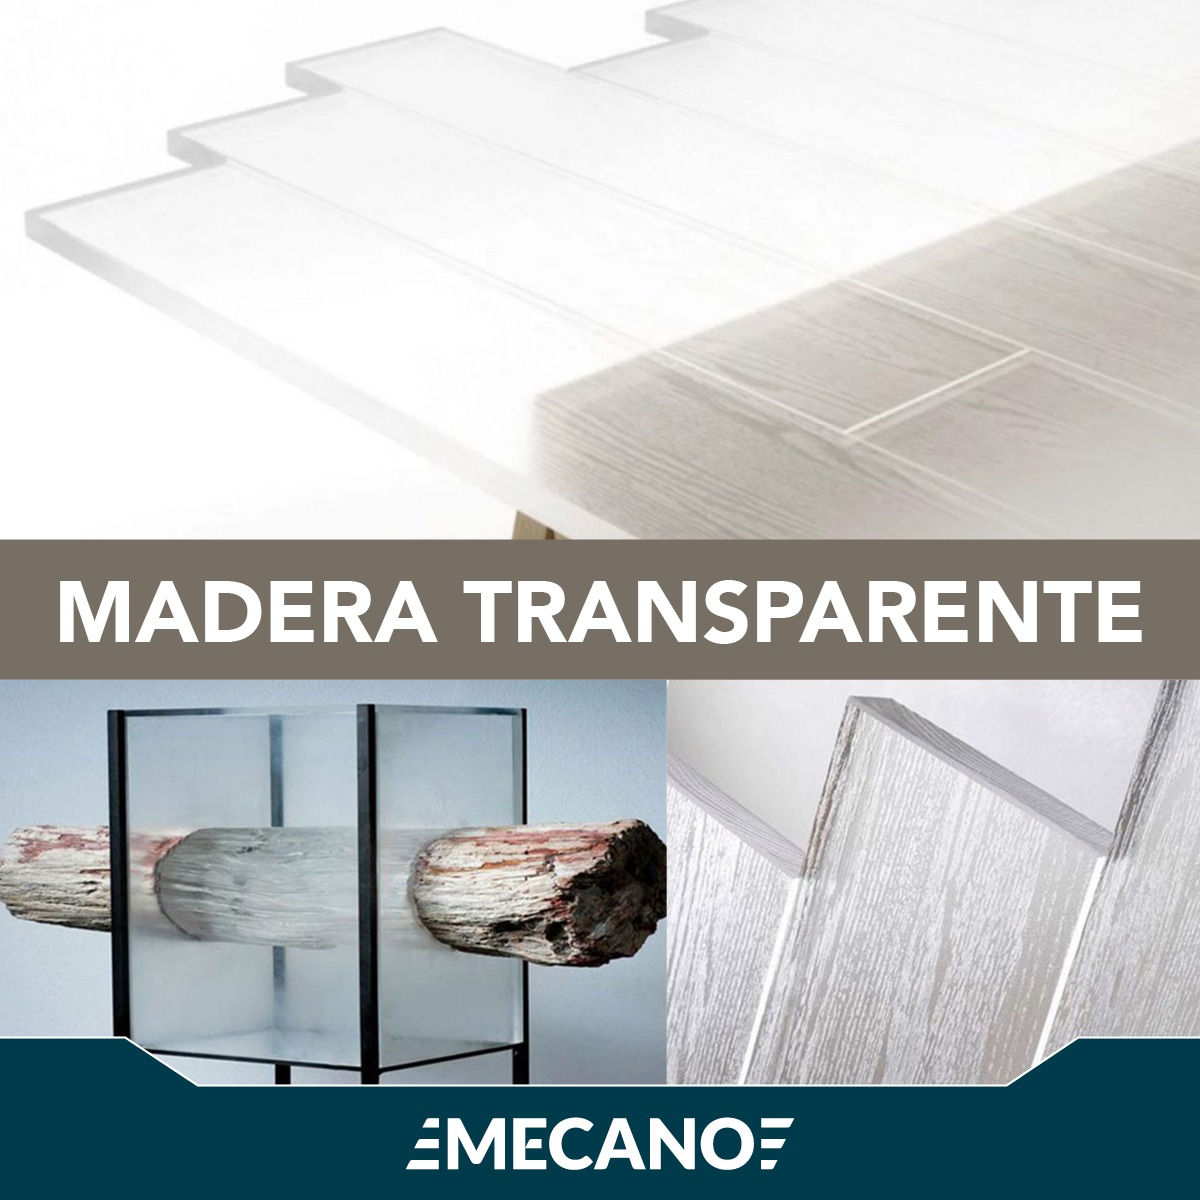 En este momento estás viendo ¿Madera transparente?